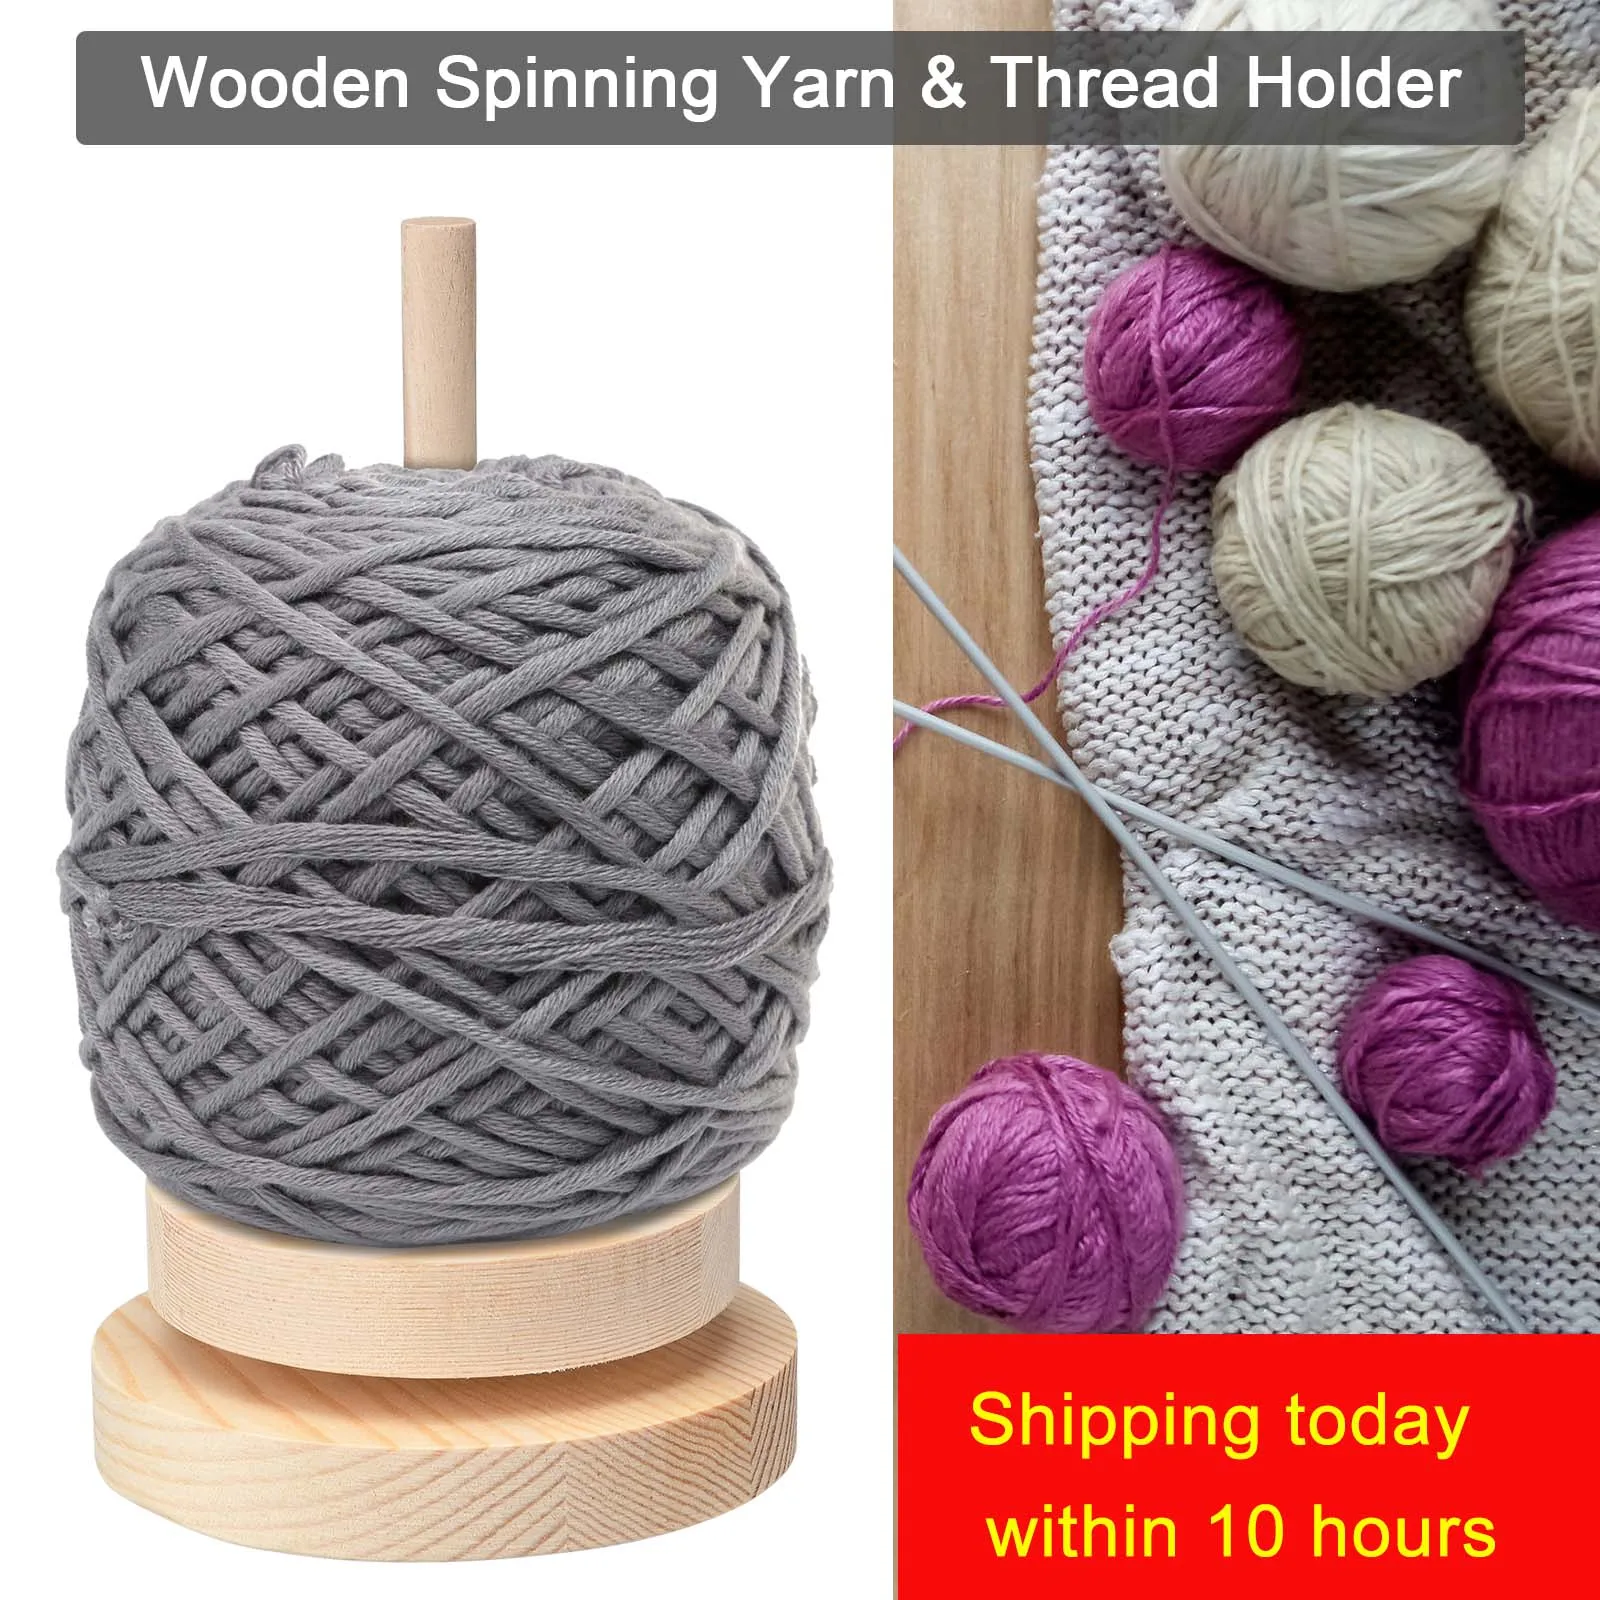 Wooden Yarn Holder for Crocheting, Yarn Holder Dispenser for Crocheting, Yarn Ball Hoder or Crochet Yarn Holder for Crocheting, Yarn Spindle for